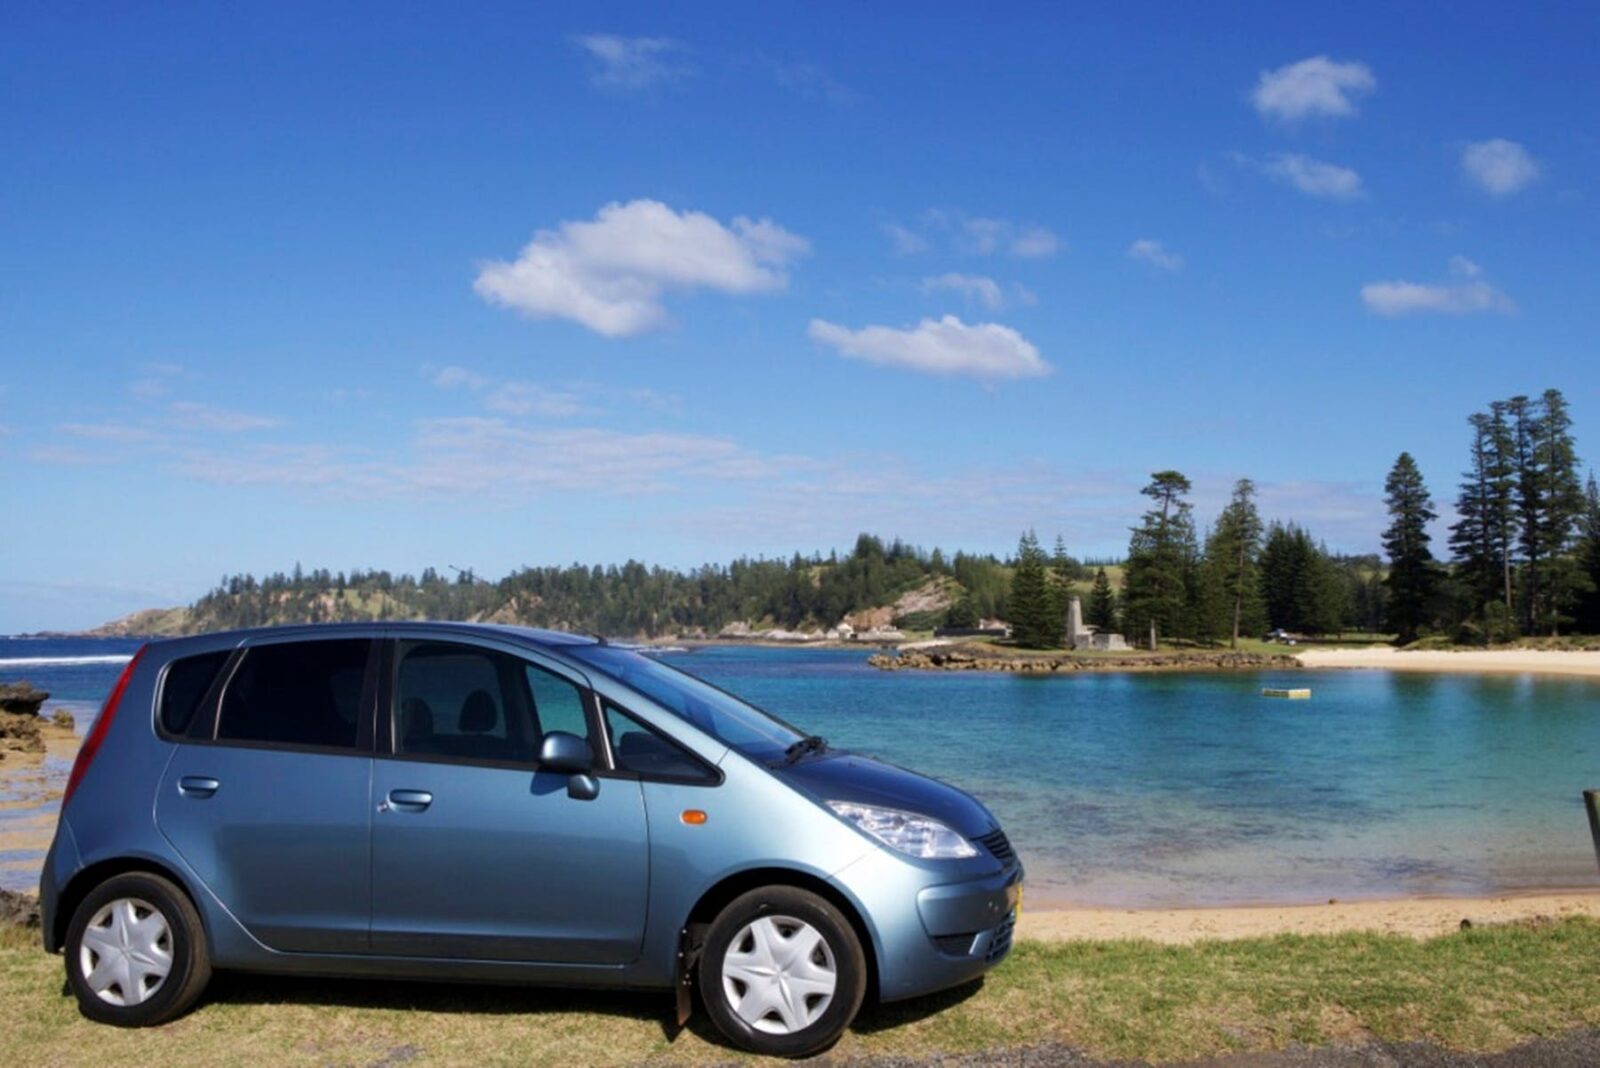 Eldoo Car Hire Norfolk Island